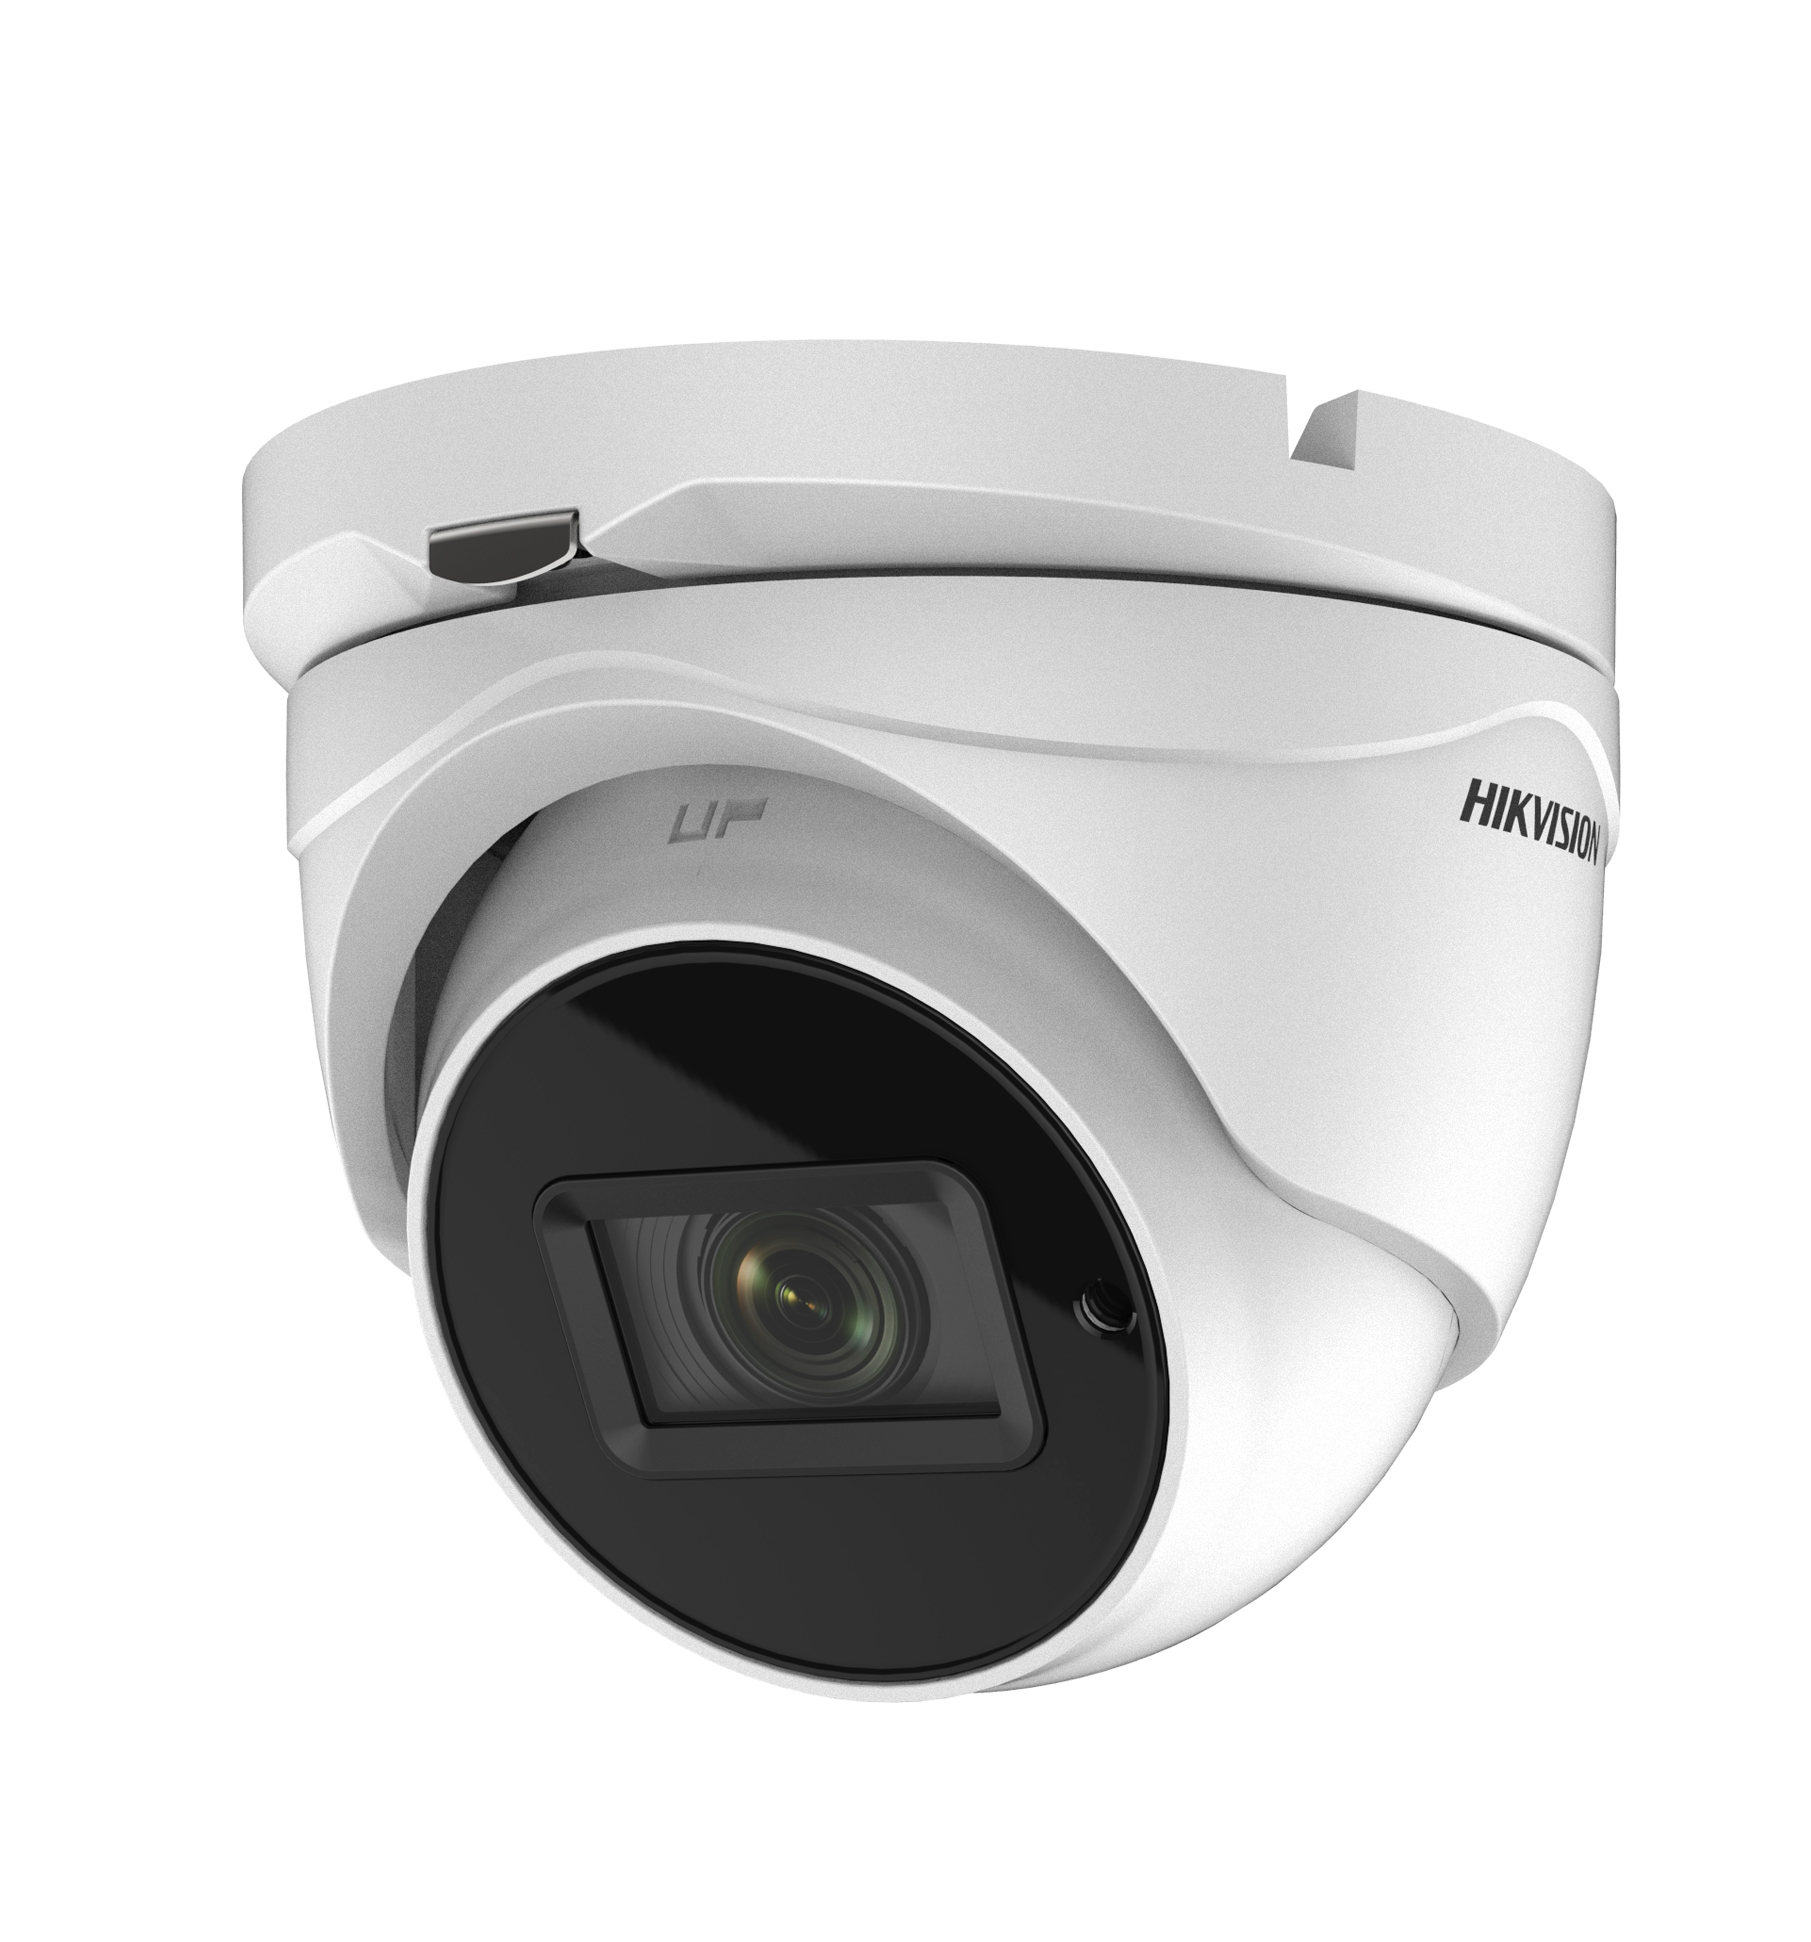 Hikvision DS-2CE56H5T-IT3Z 2.8-12mm - 5MP TVI kamera u turret kućištu.